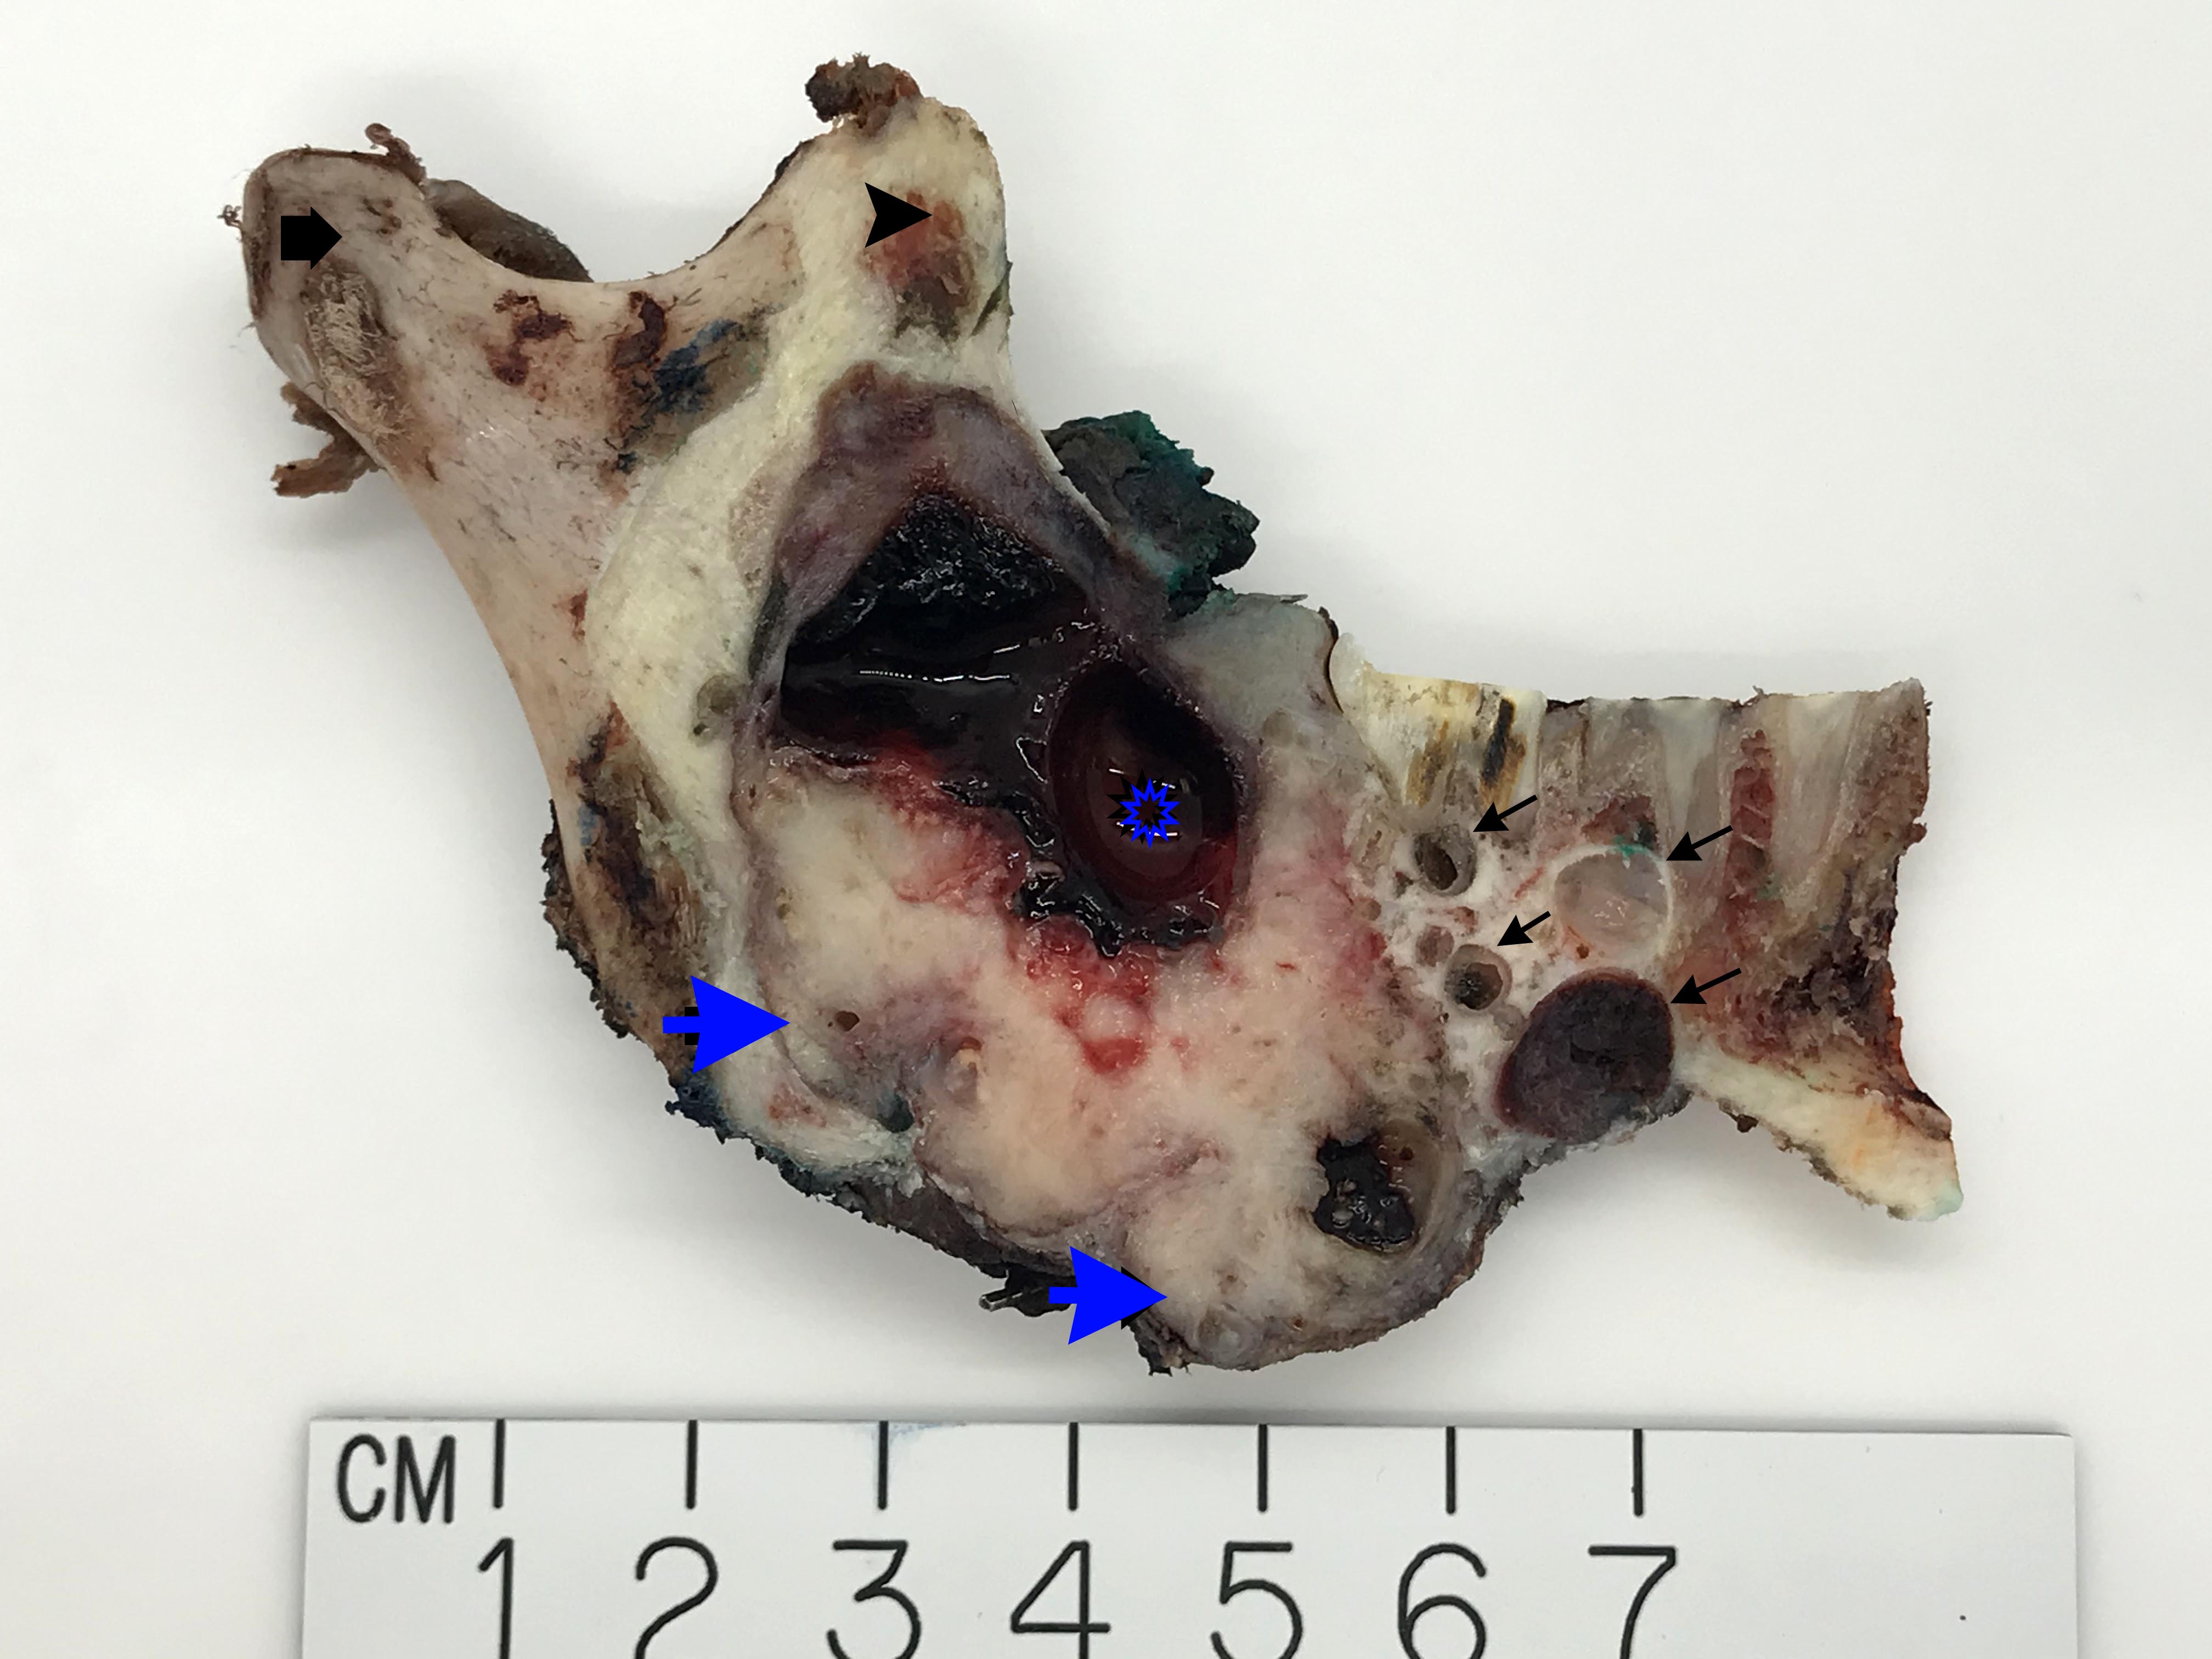 Case 1: Mandibular granular cell ameloblastoma